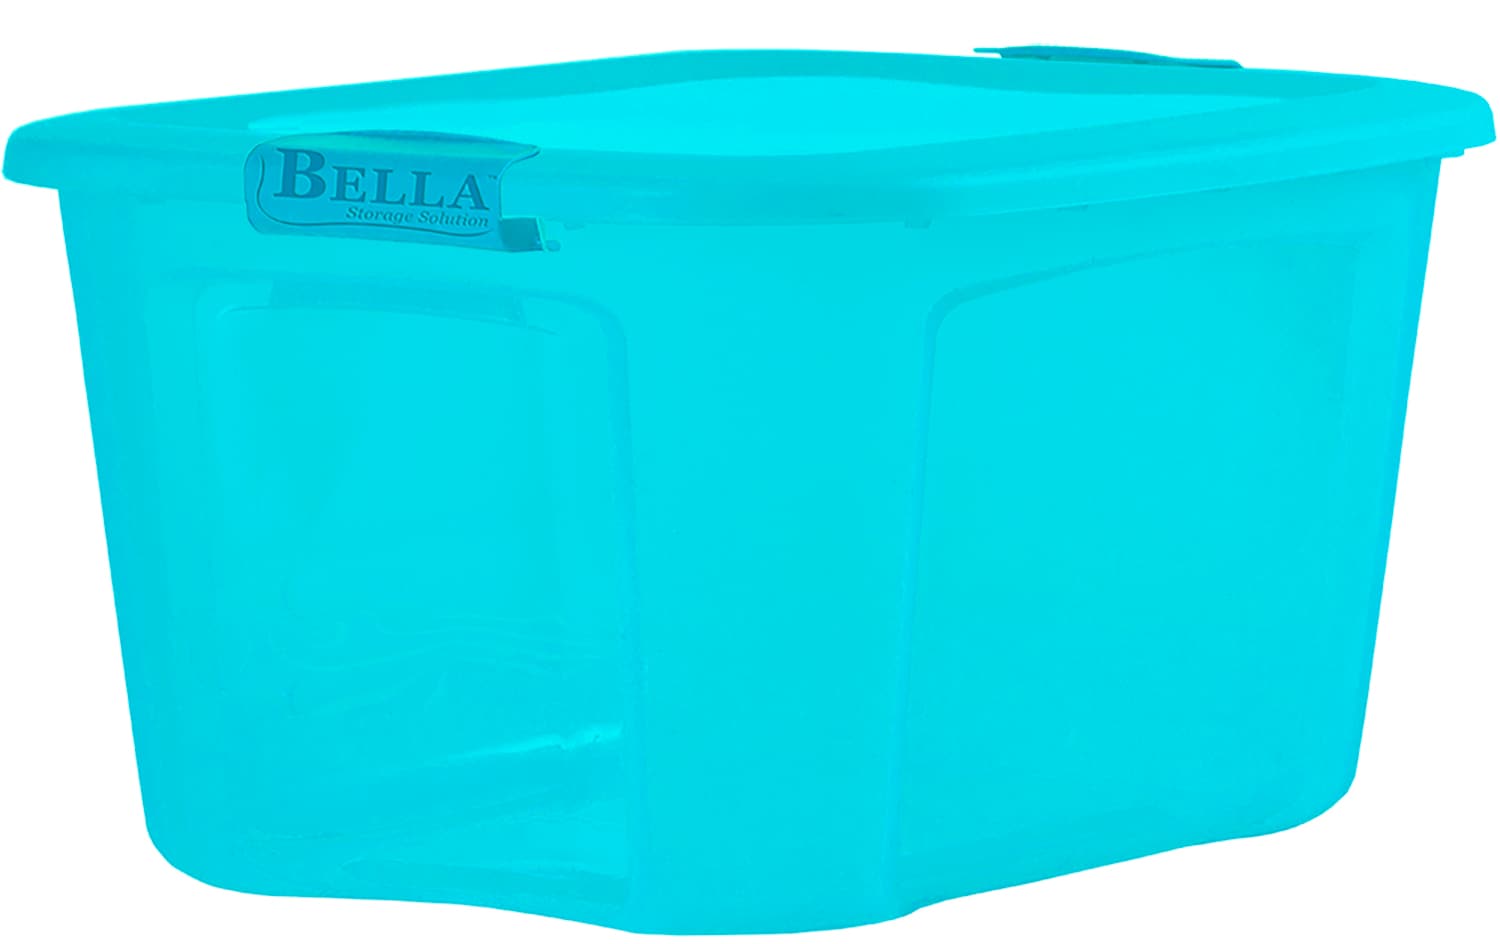 Bella 44 gal. Storage Box with Locking Lid